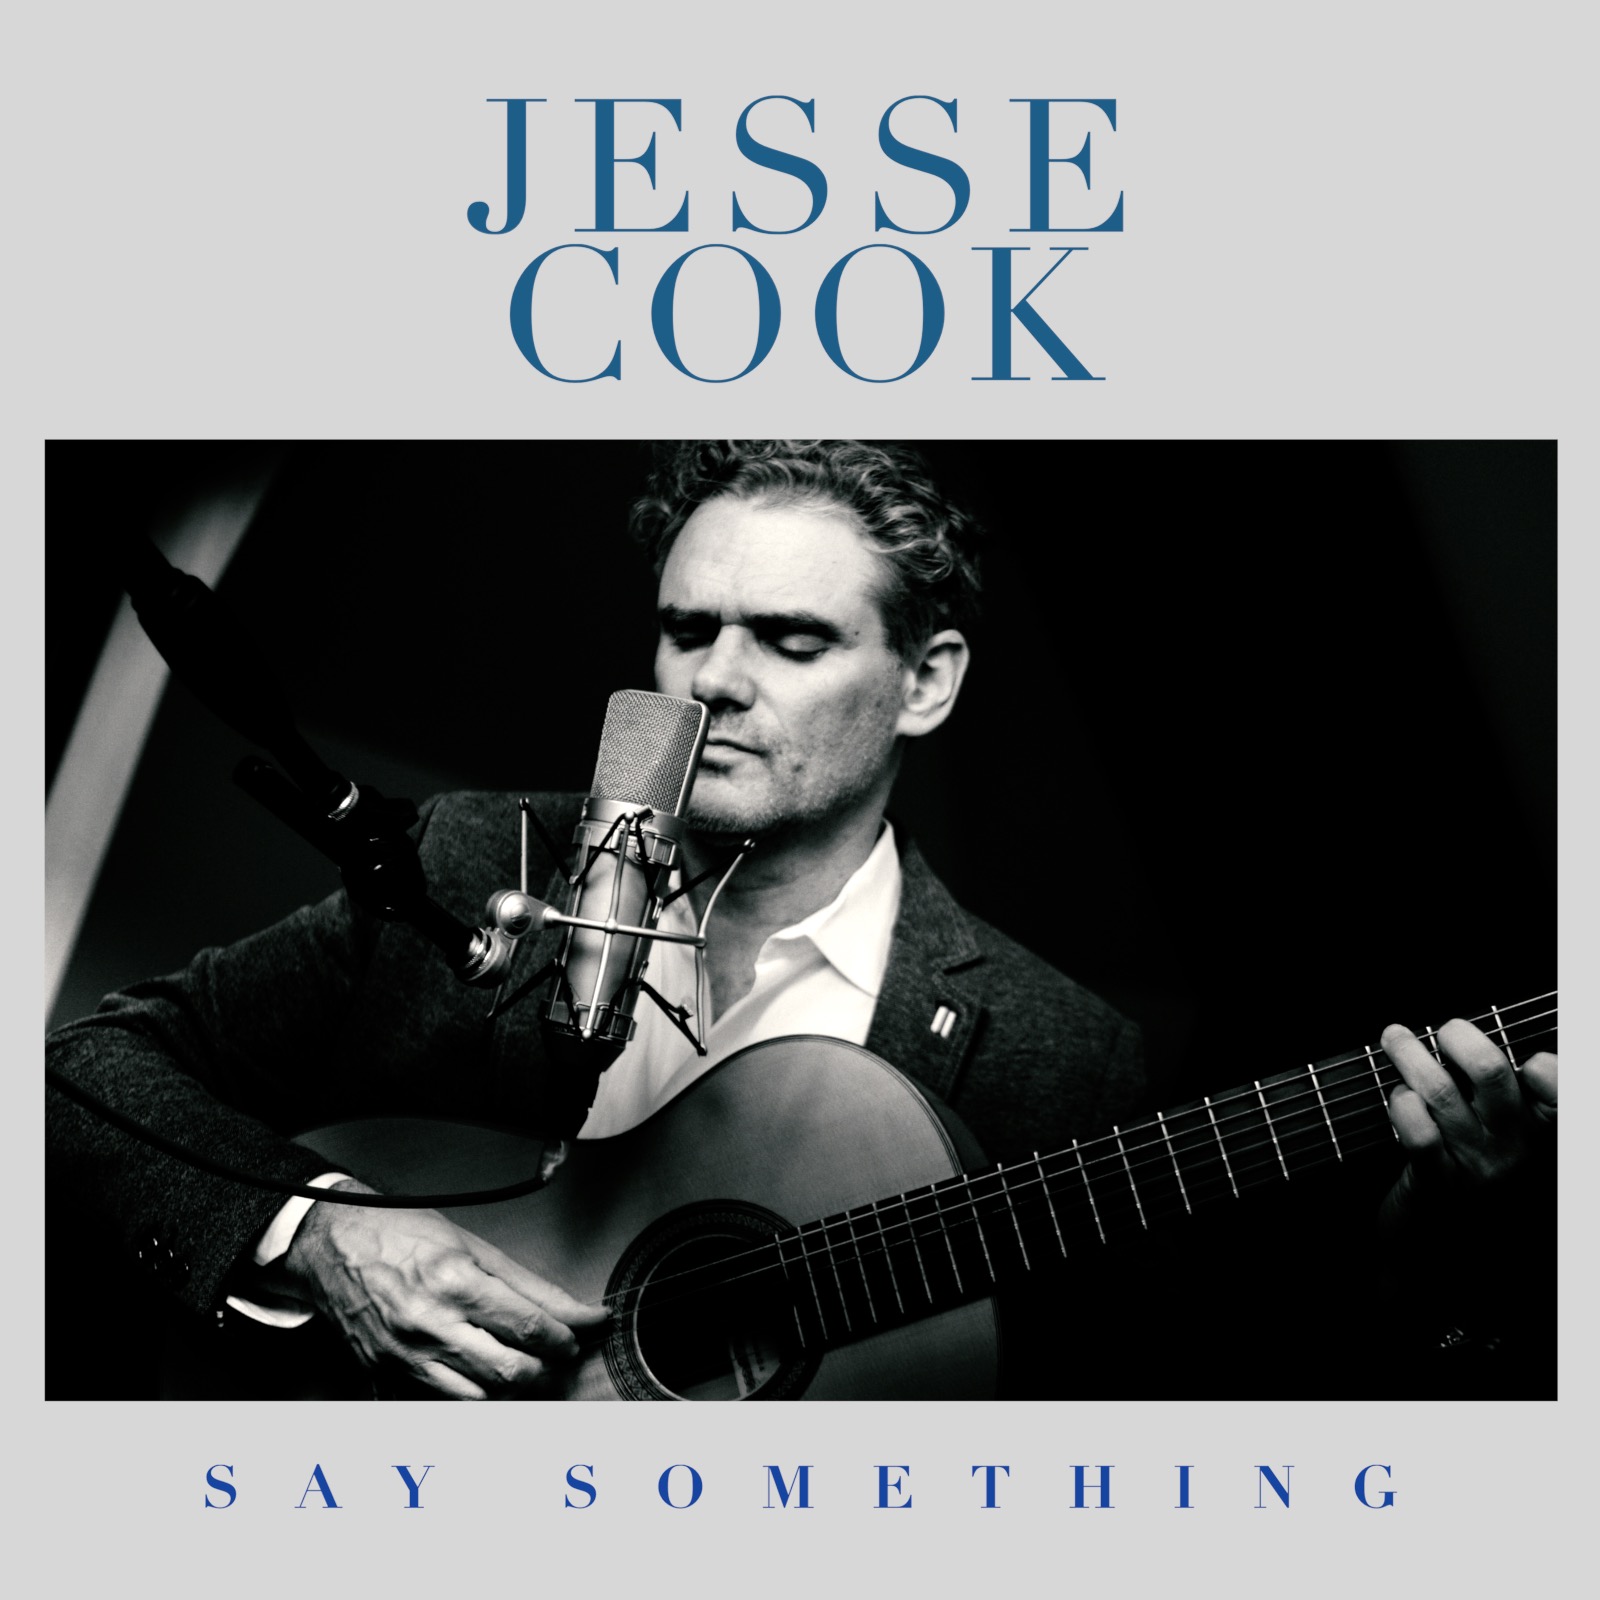 Say Something - Jesse Cook